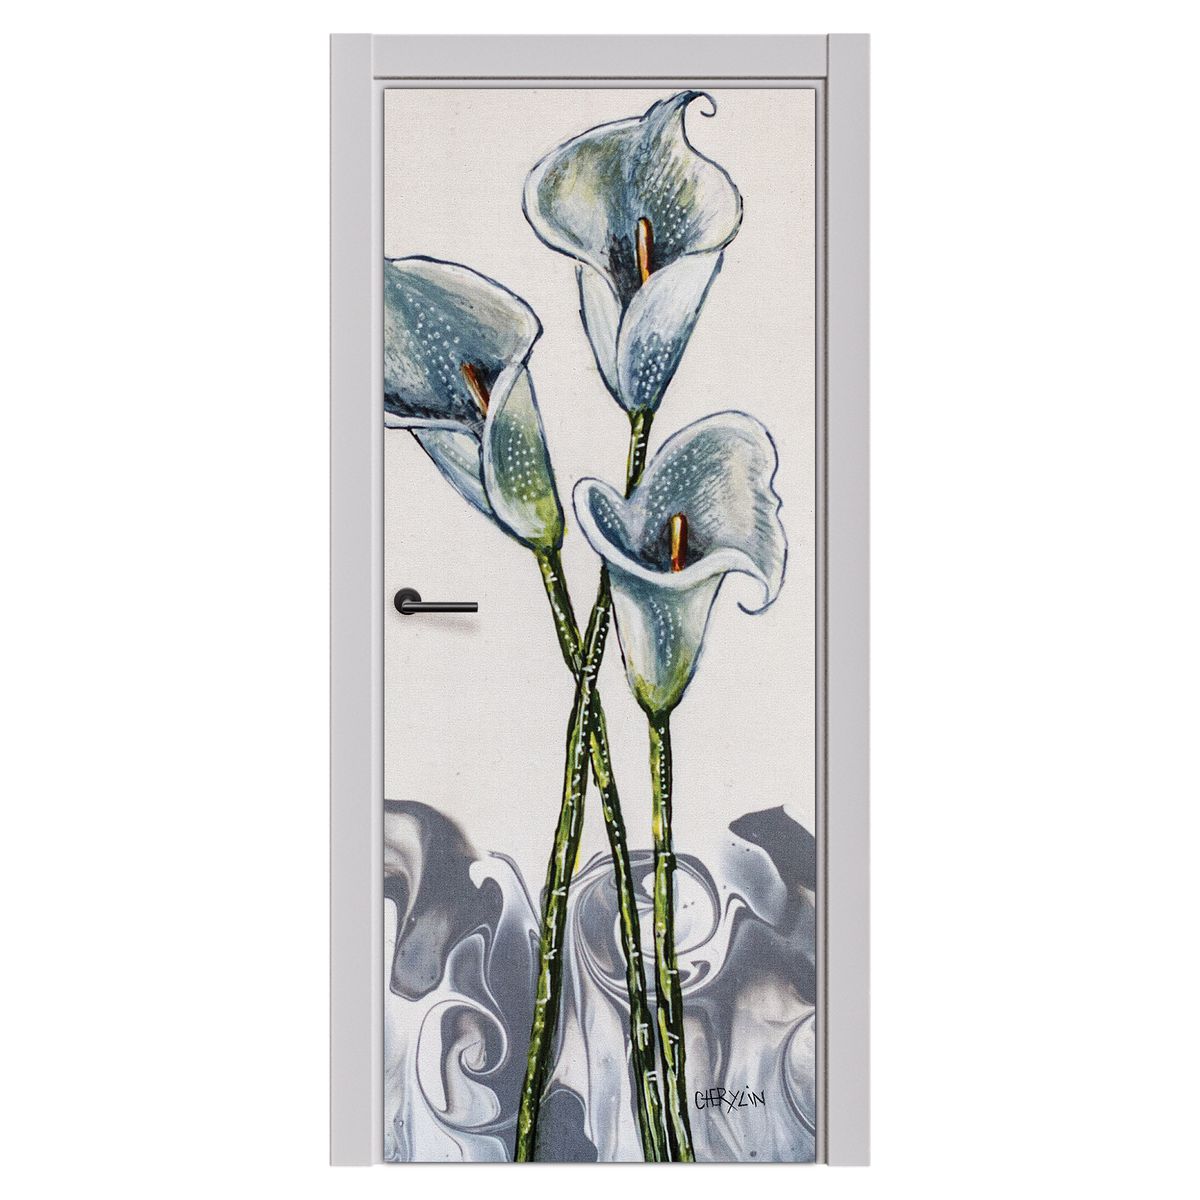 Decoupage - Arum Lily By Cherylin Louw Door